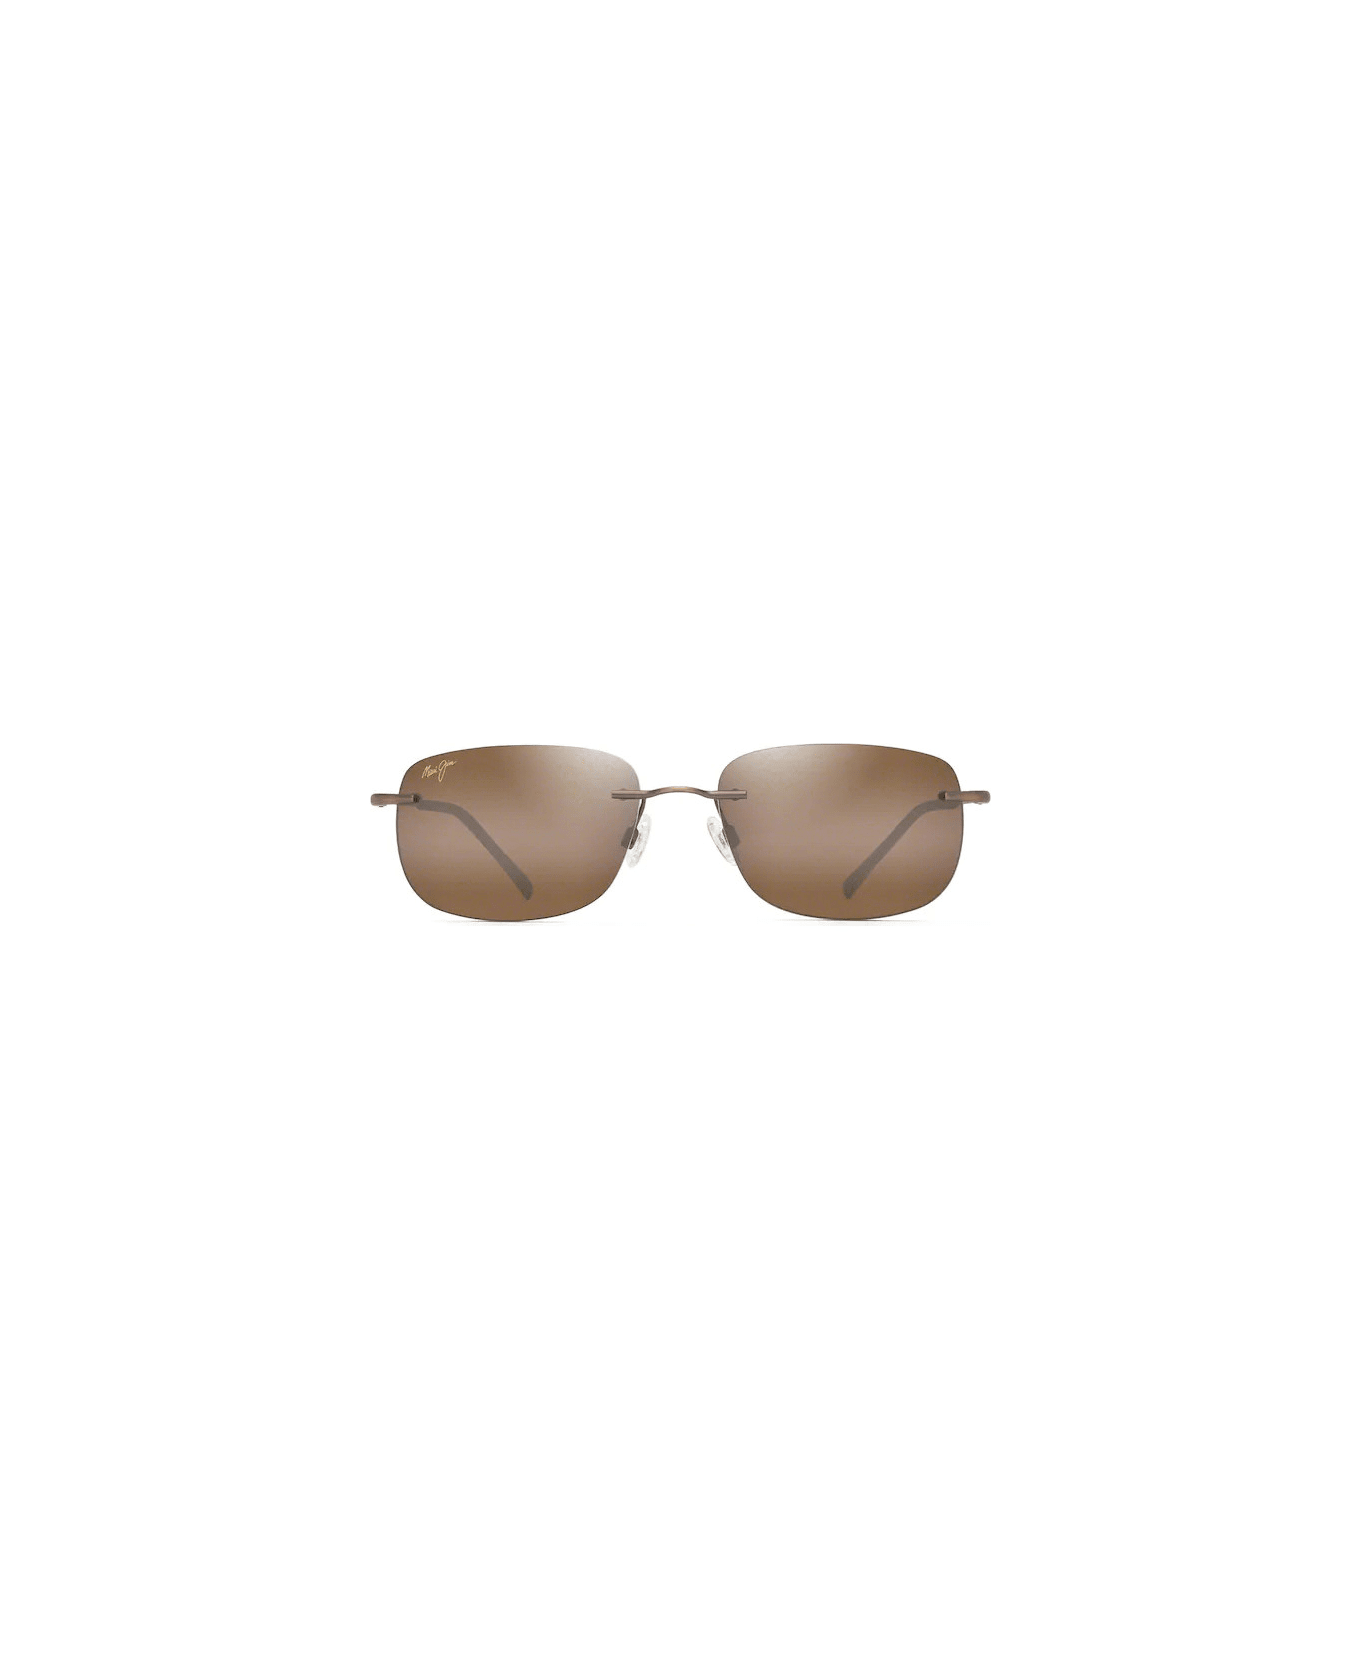 Maui Jim H334-18 Sunglasses - Rame